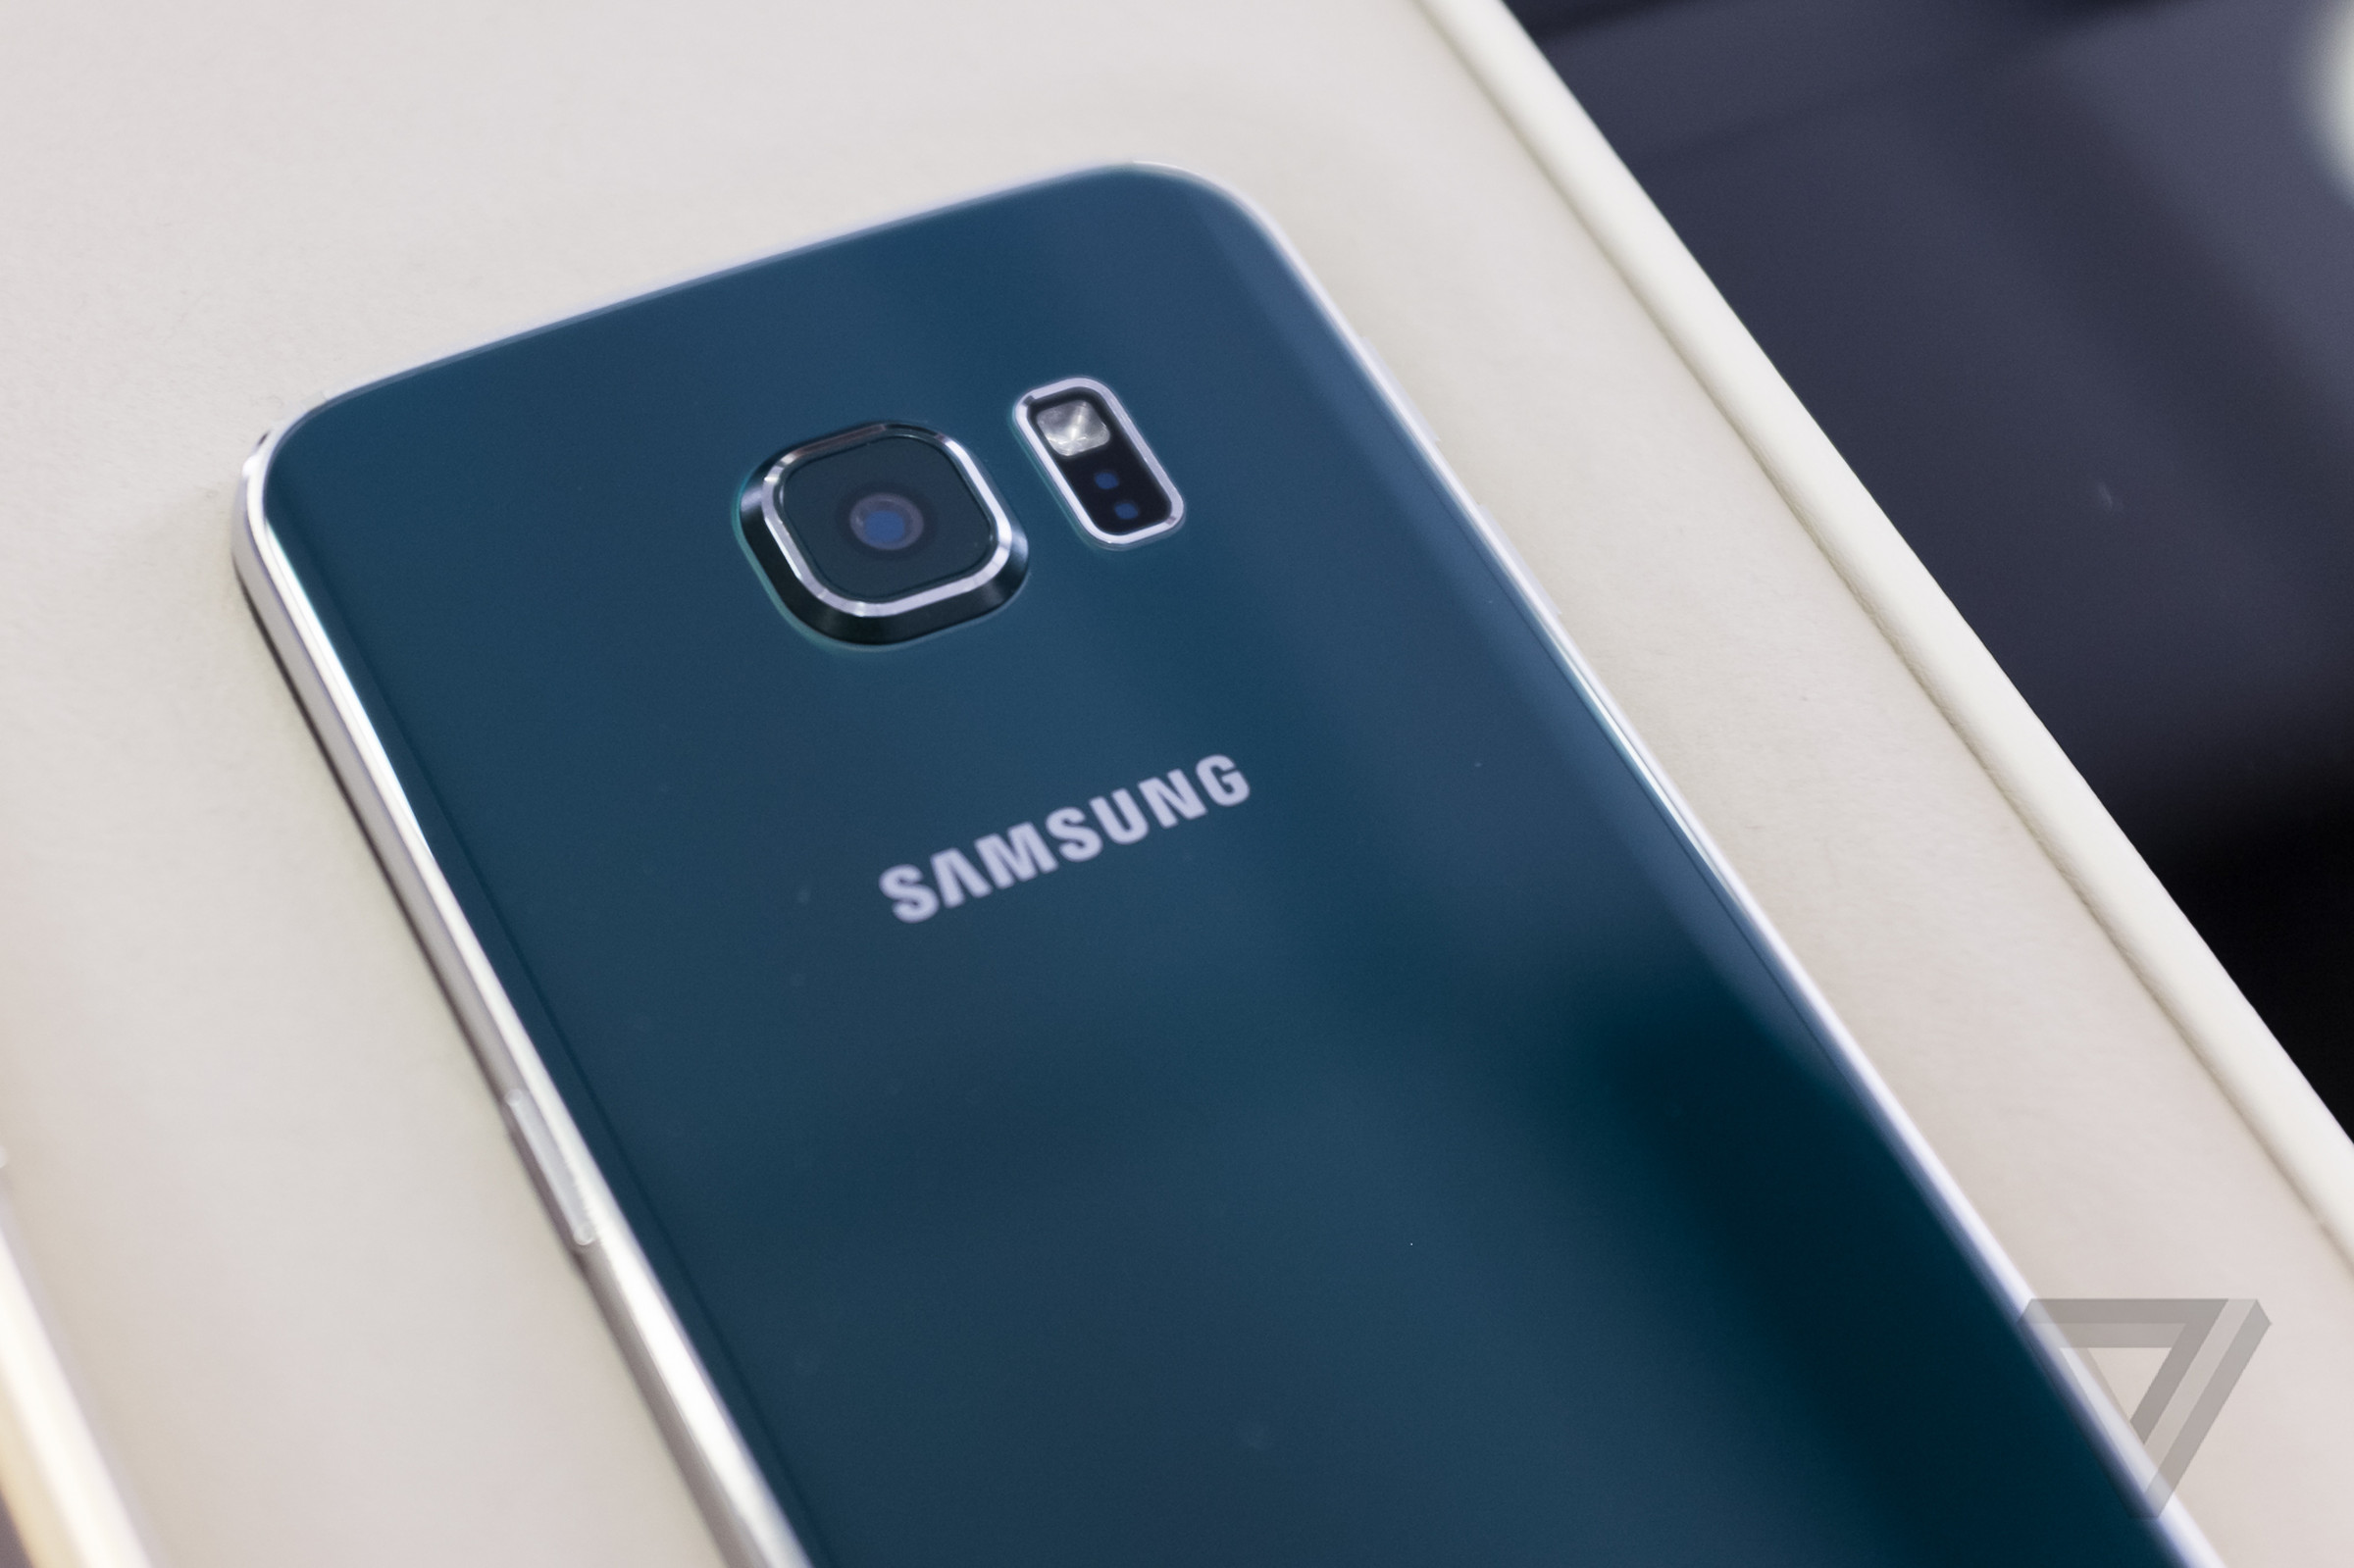 Samsung Galaxy S6 and S6 Edge photos